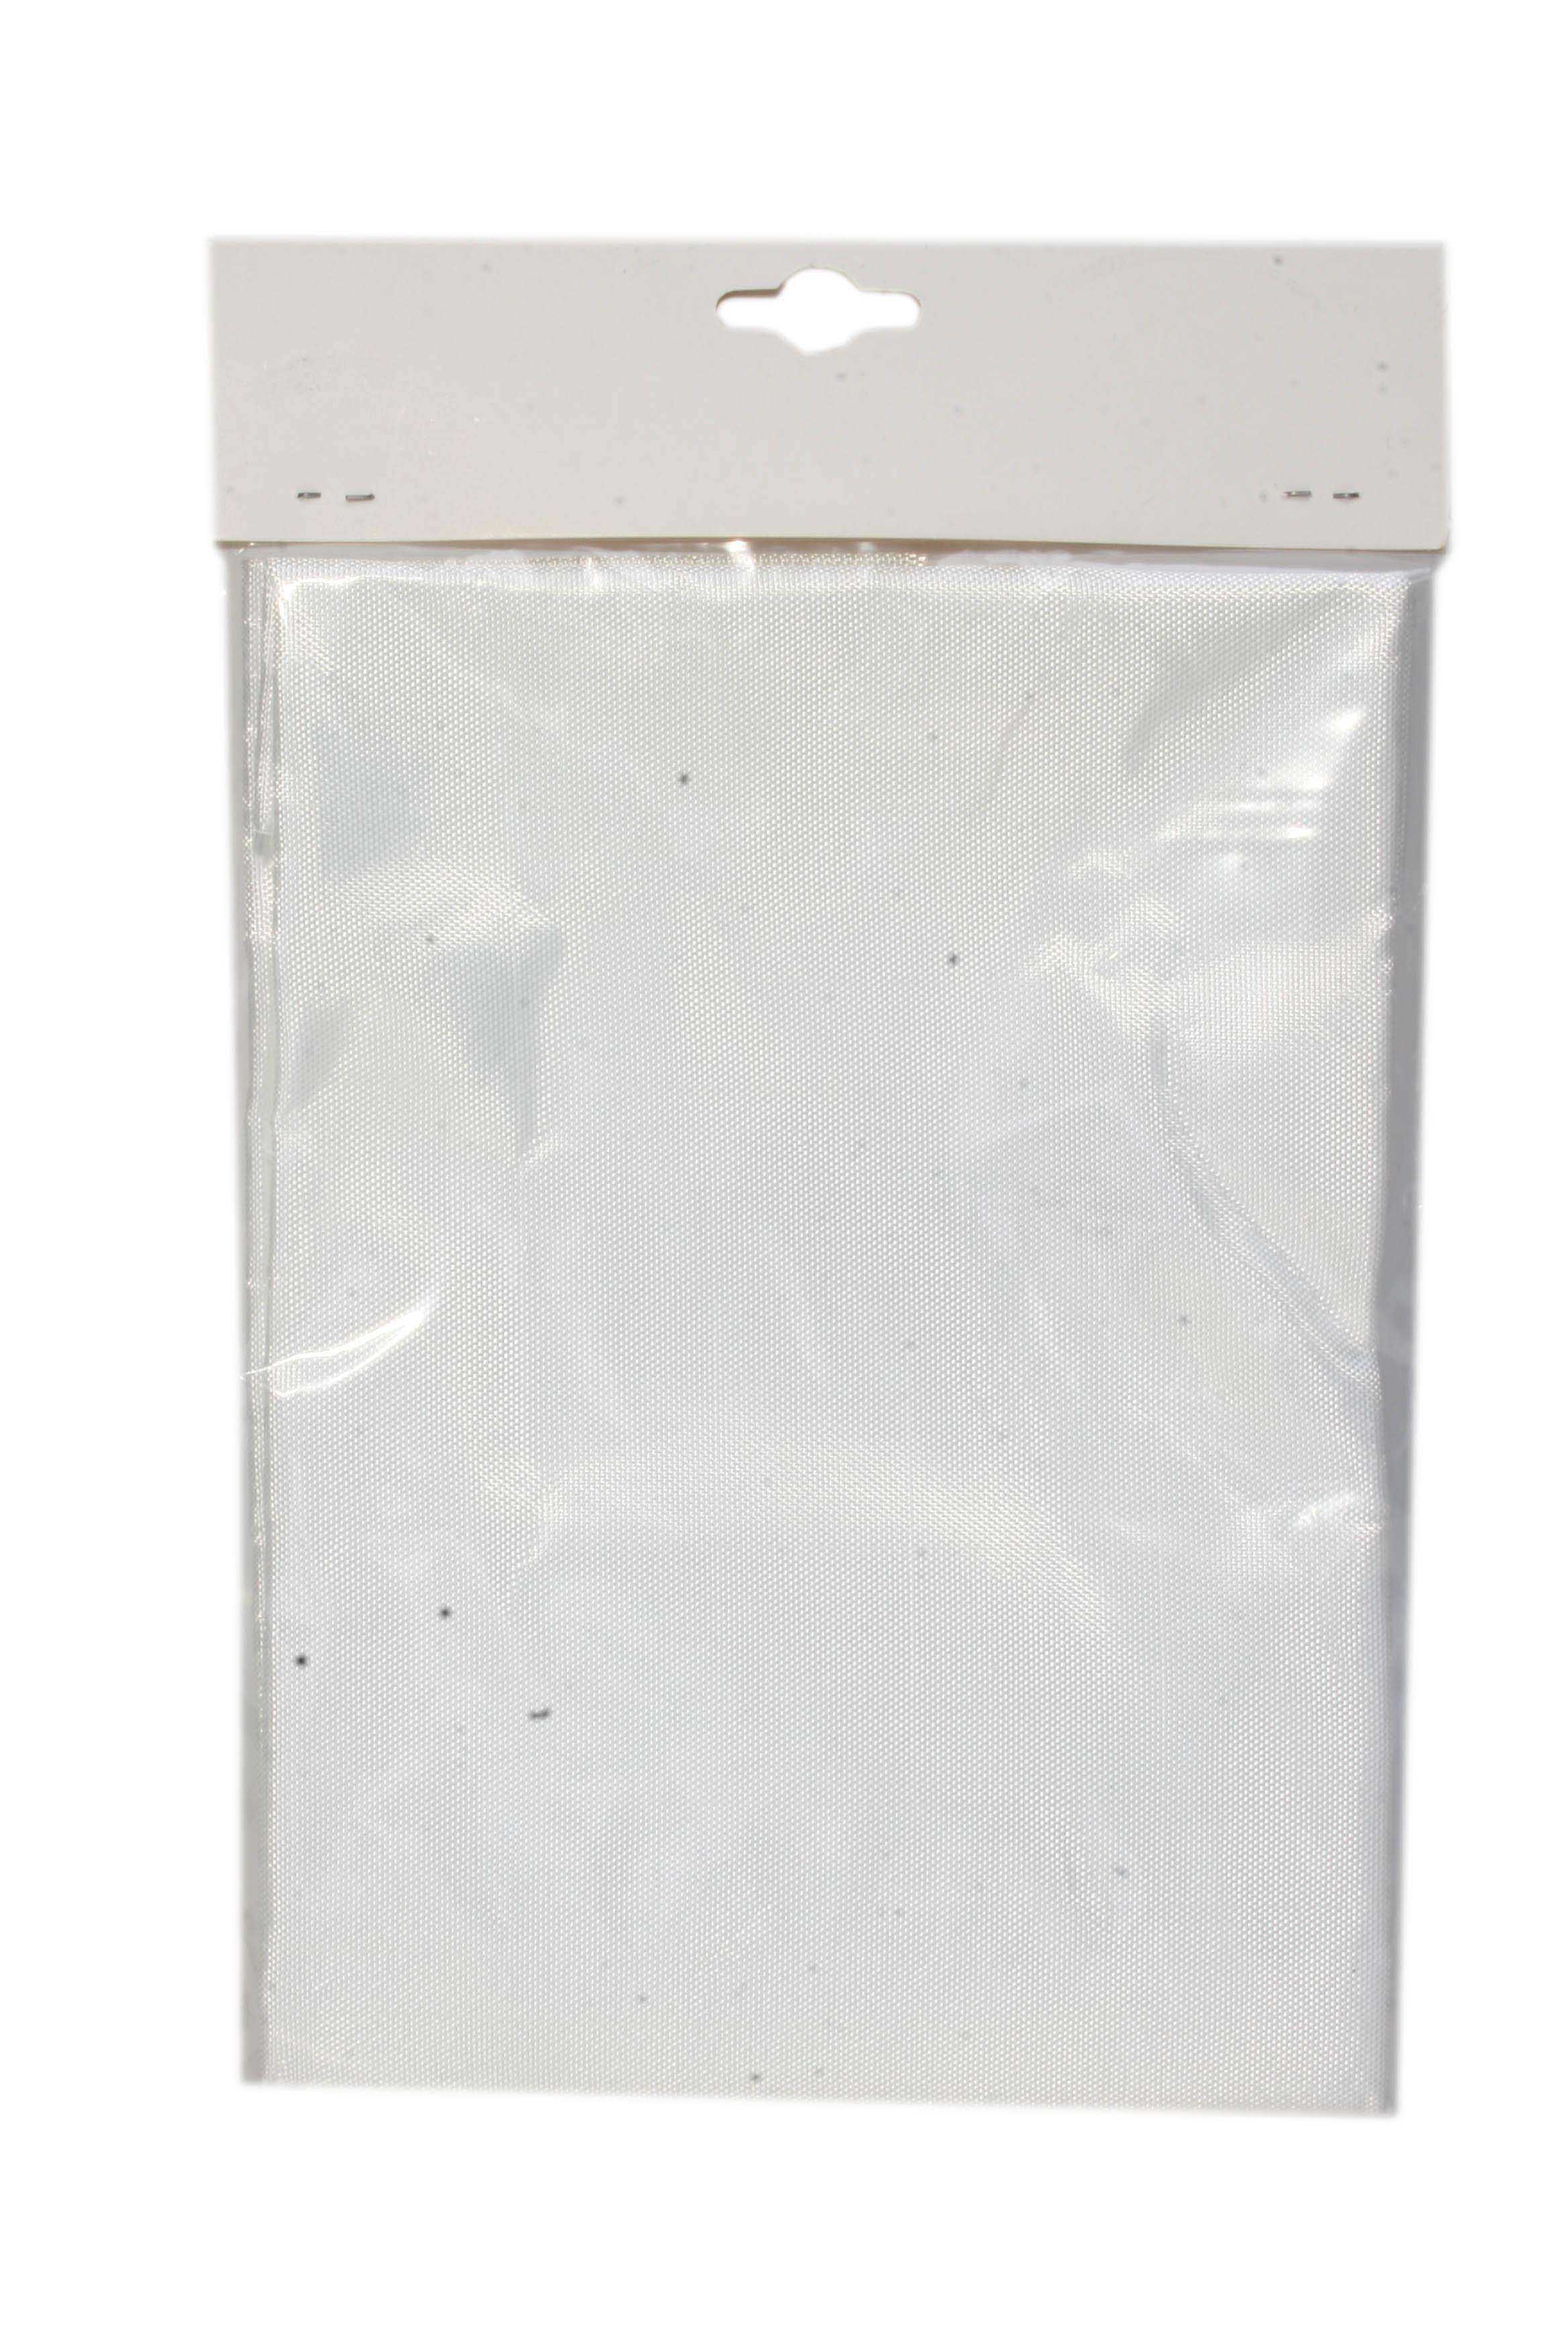 Mipa Glasgewebe 200 g/qm SB-Verpackung (0,5qm)